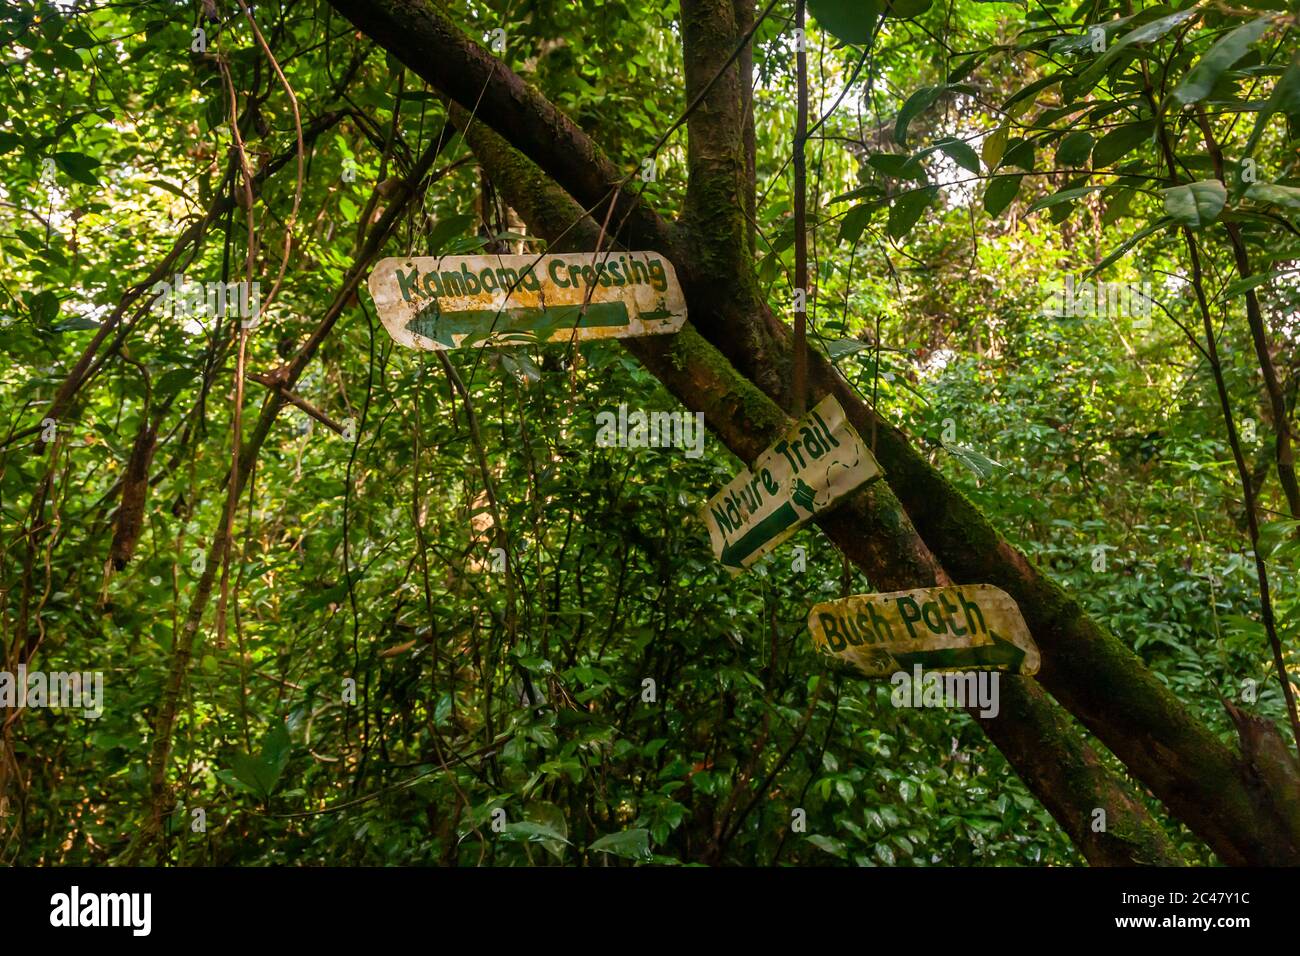 Kambama Crossing, Nature Trail, Bush Path. Directions Signs in Sierra Leone Bush Stock Photo